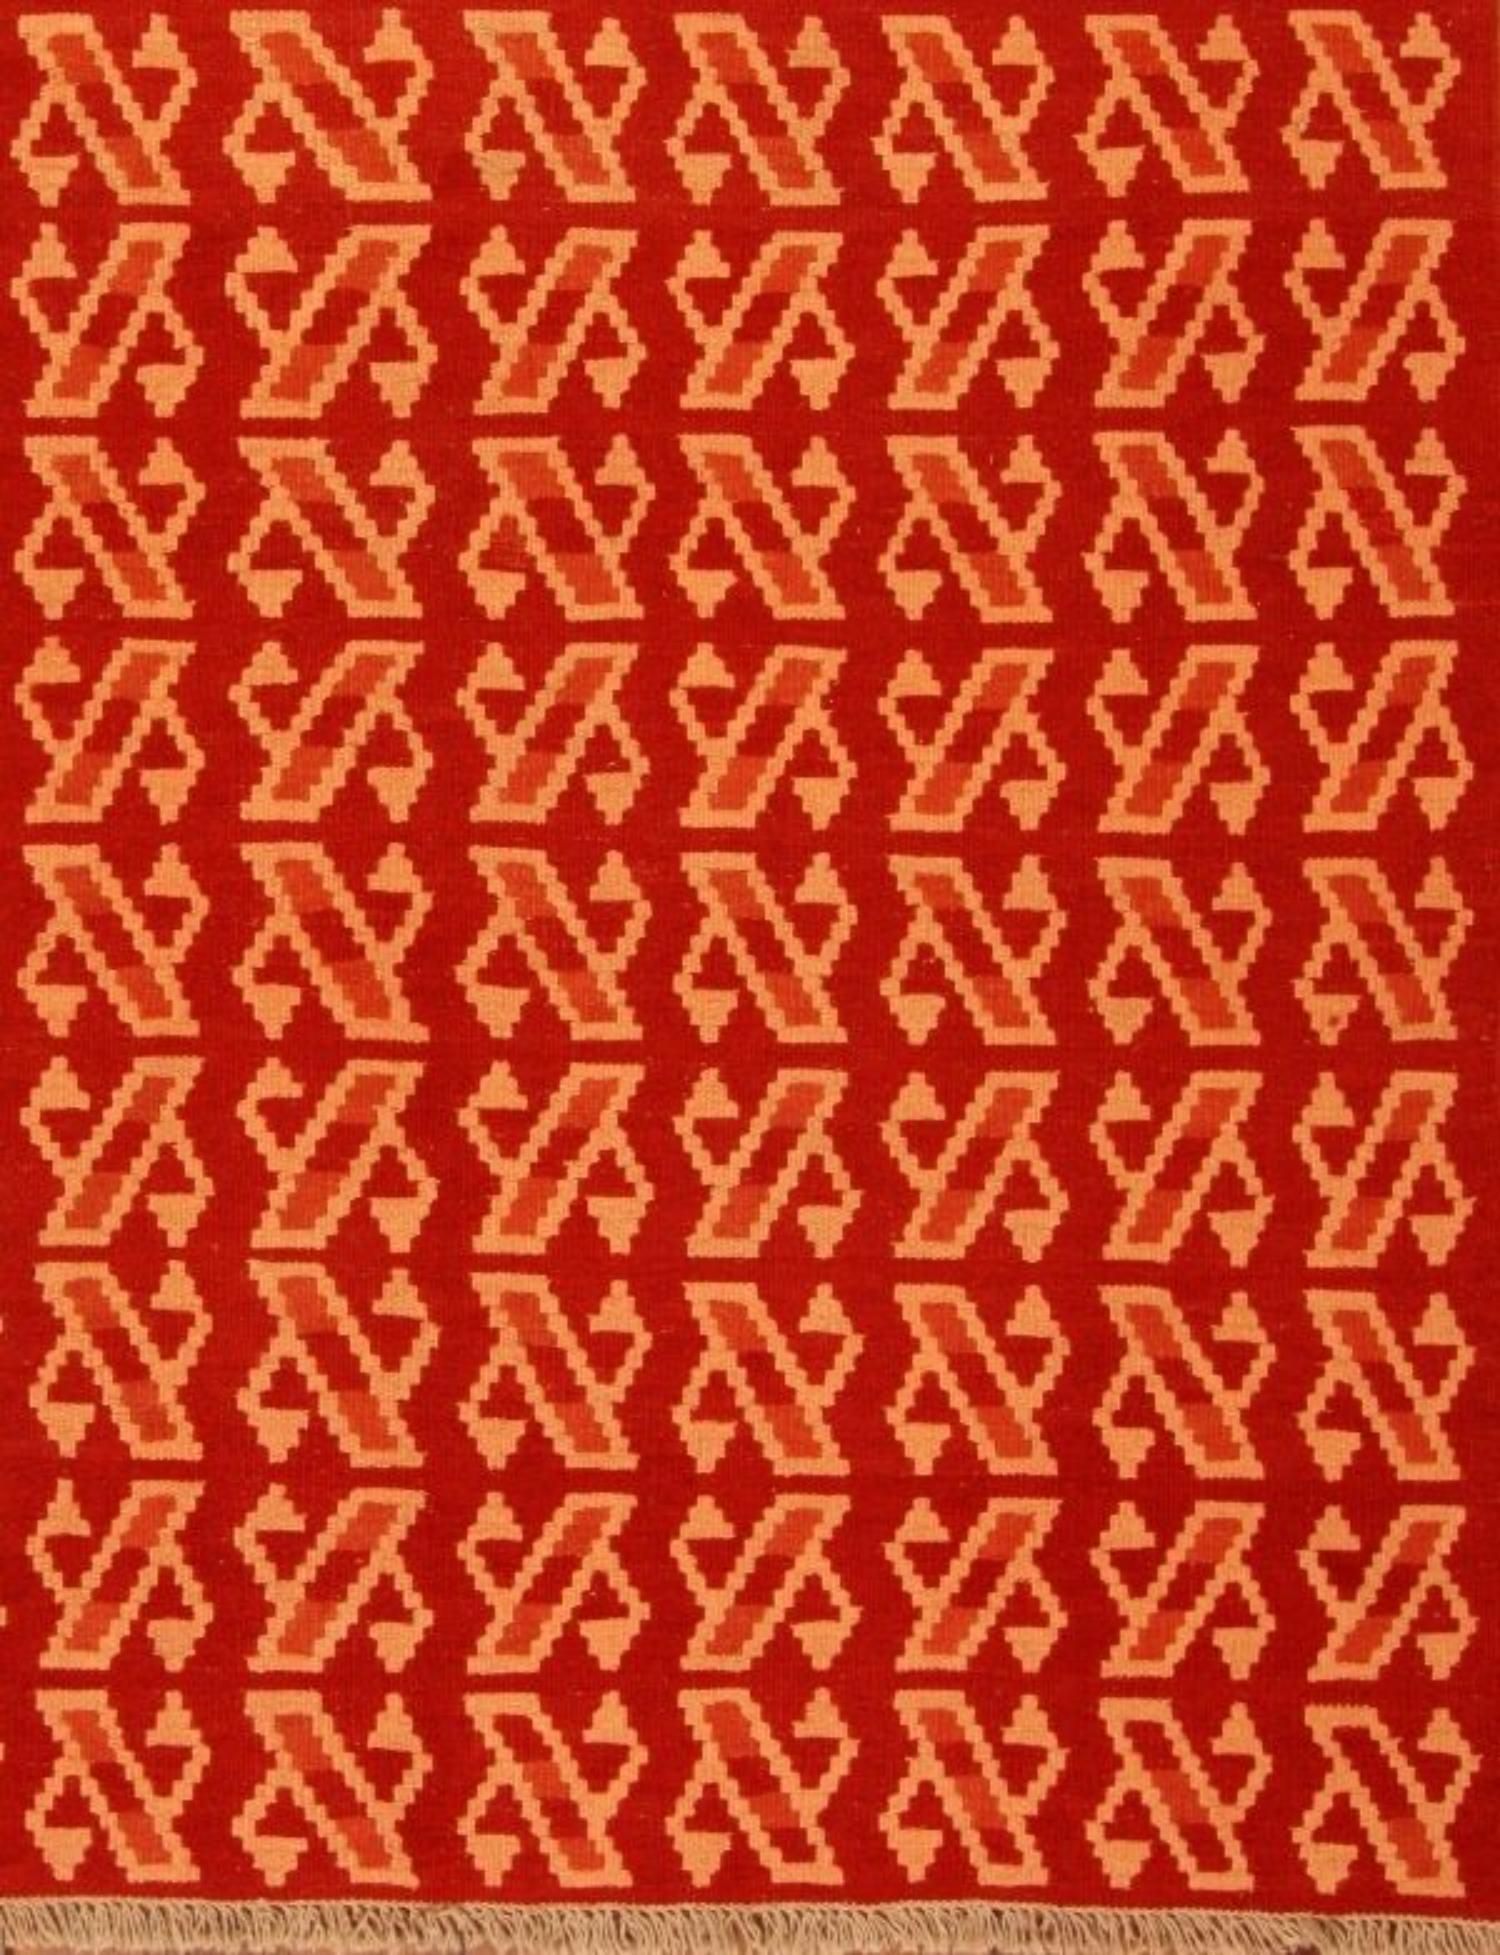 Handmade Vintage Persian Style Ardabil Kilim Rug (160cm x 210cm / 5.25ft x 6.89ft)

Step into a world of geometric elegance with our Handmade Vintage Persian Style Ardabil Kilim Rug. Originating from the 1970s, this woolen kilim rug, measuring 160cm